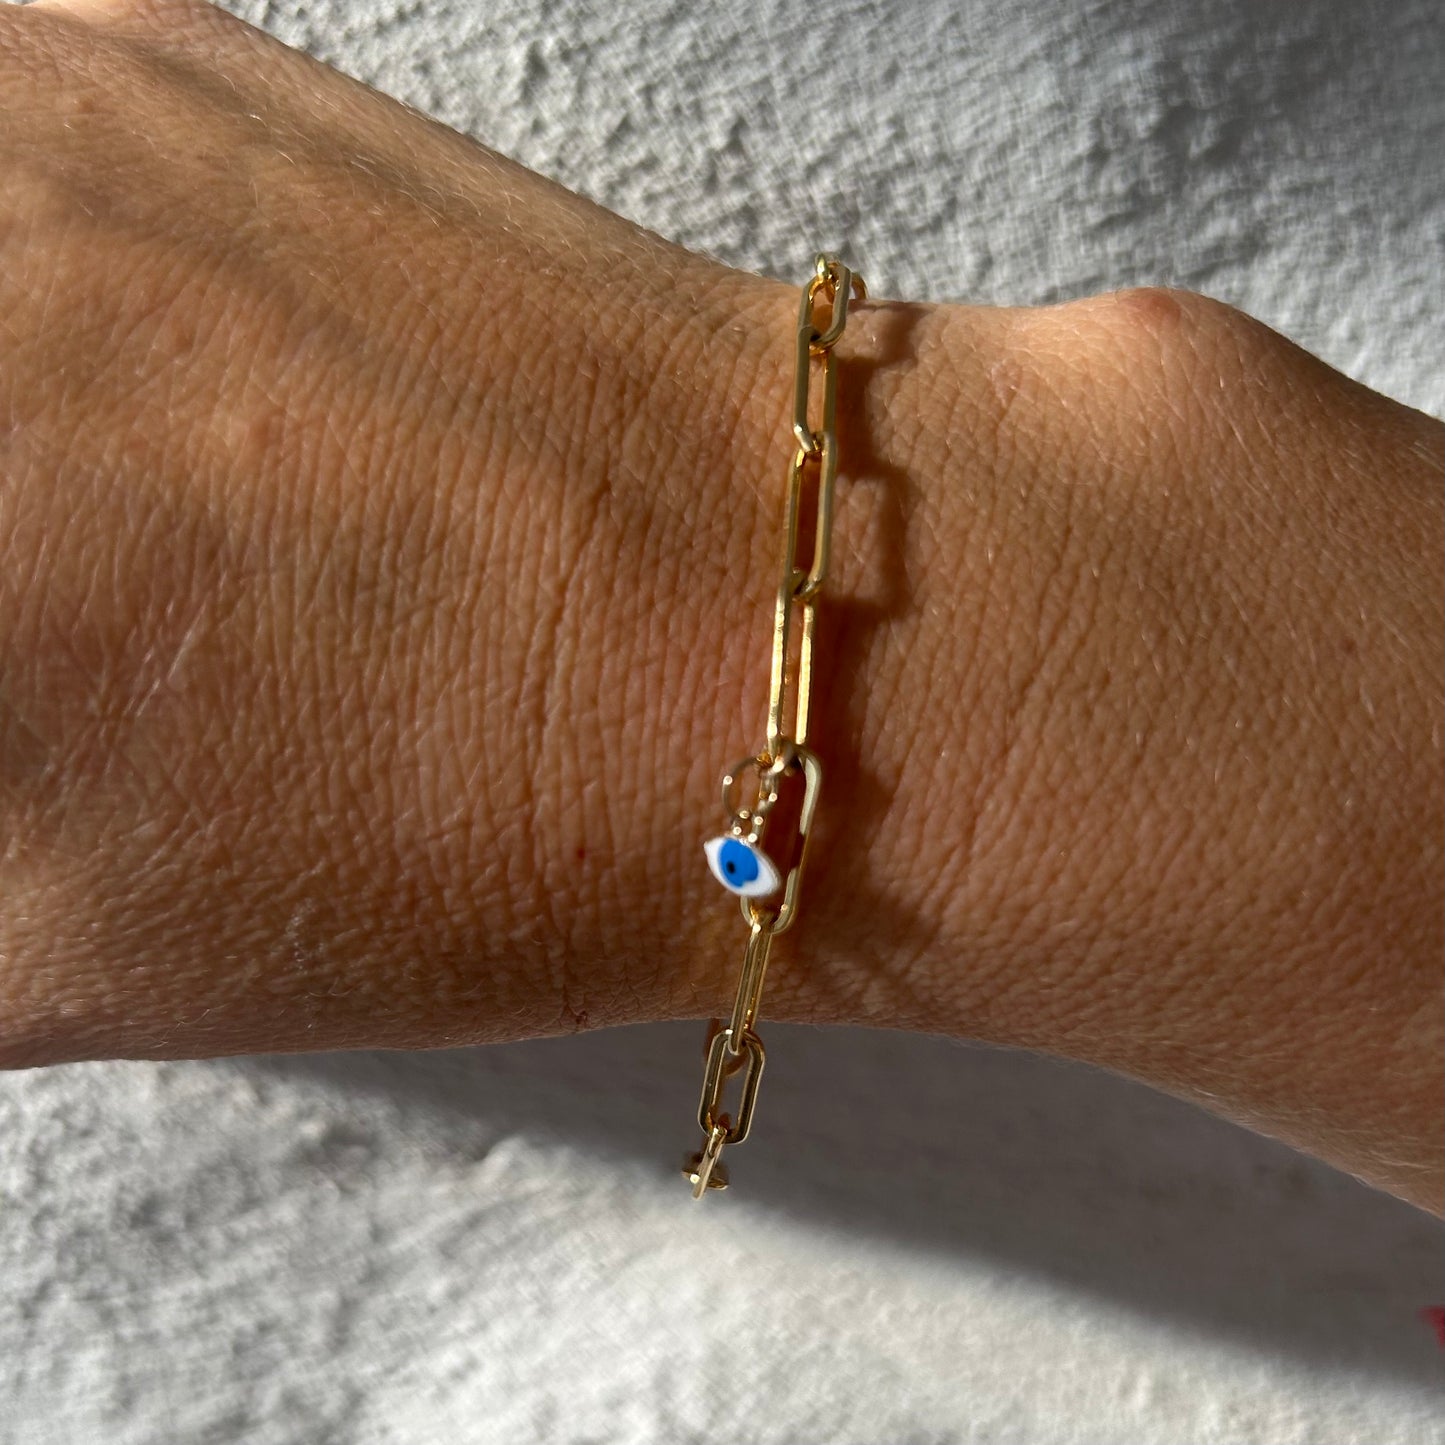 Paper clip chain bracelet with 14k gold evil eye pendant